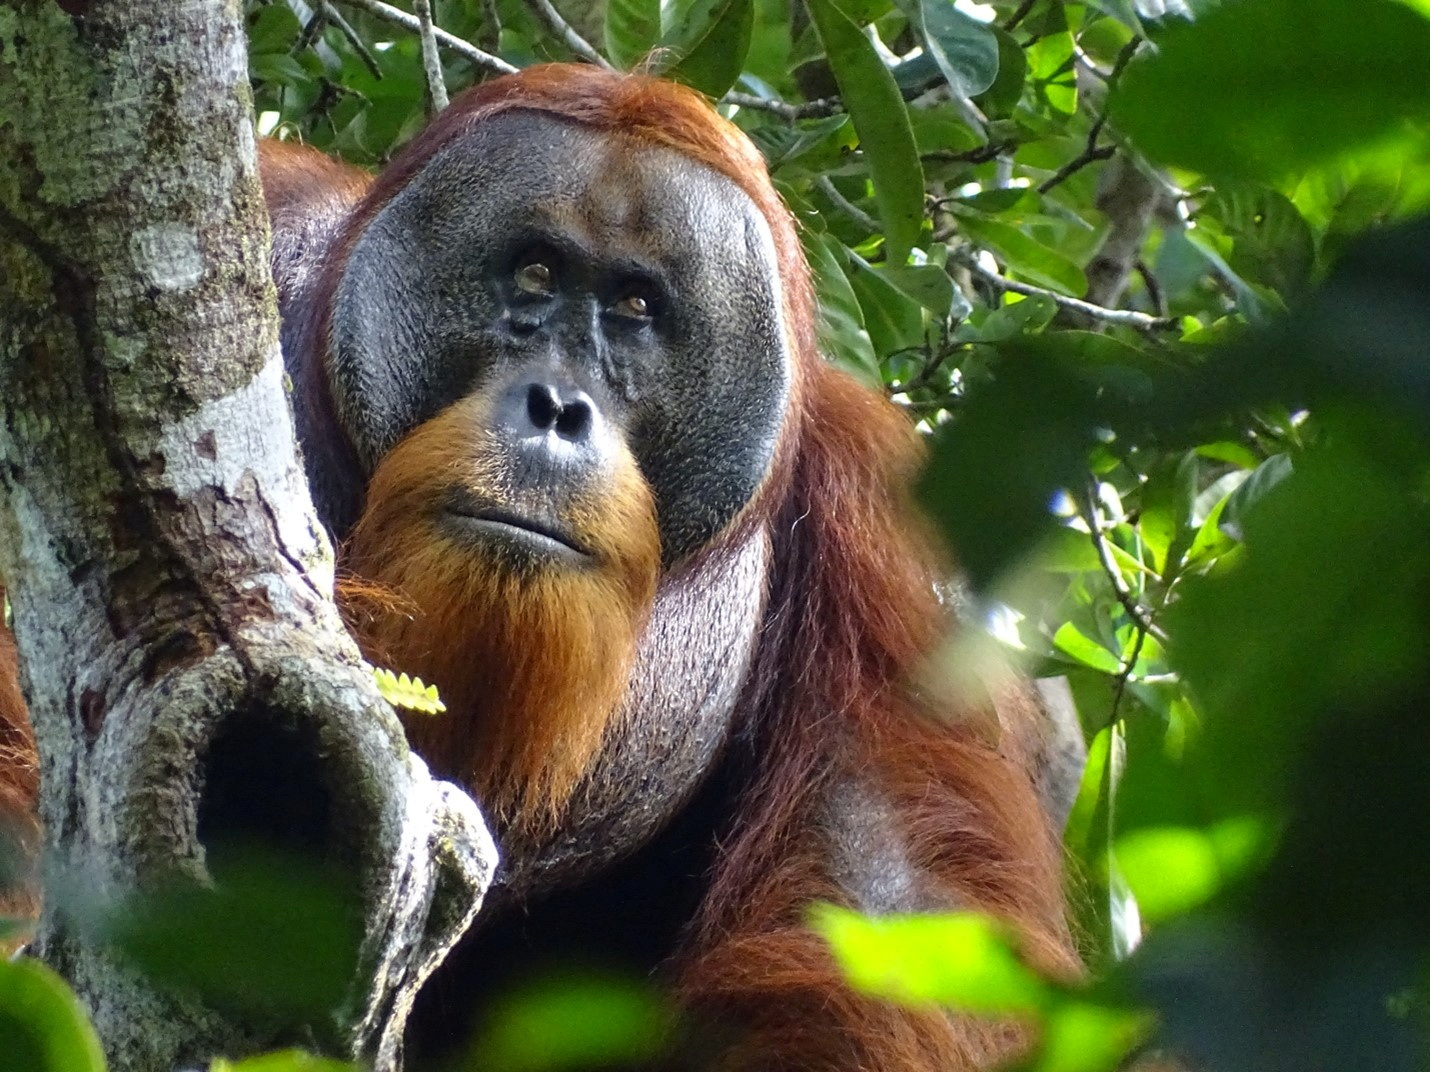 Seekor orangutan Sumatra jantan bernama Rakus terlihat dua bulan setelah mengobati luka sendiri menggunakan tanaman obat di lokasi penelitian Suaq Balimbing.jpg